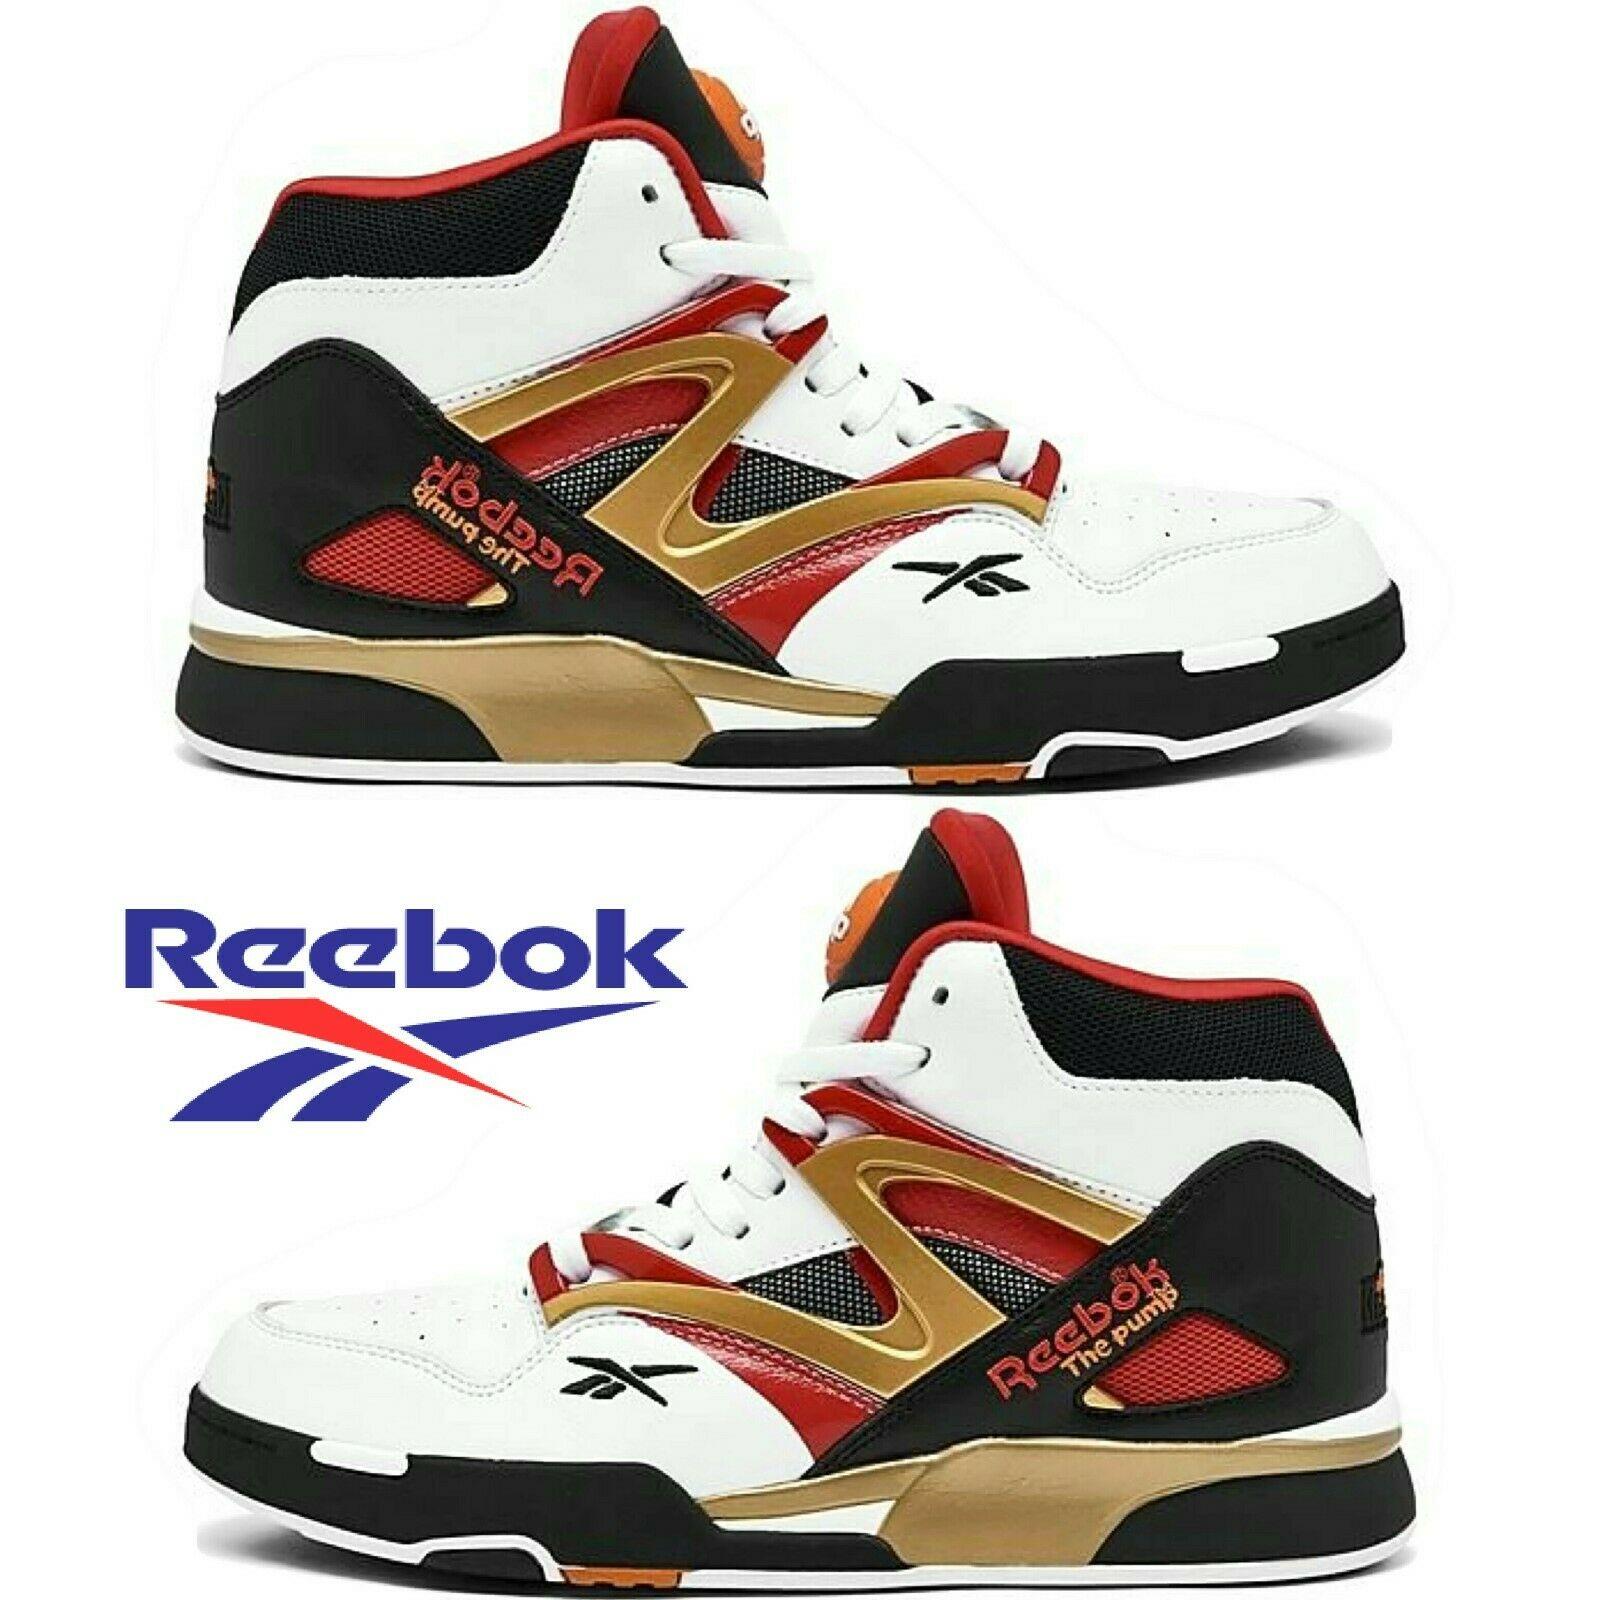 Reebok Pump Omni Zone 2 Basketball Shoes Men`s Sneakers Running Casual Sport